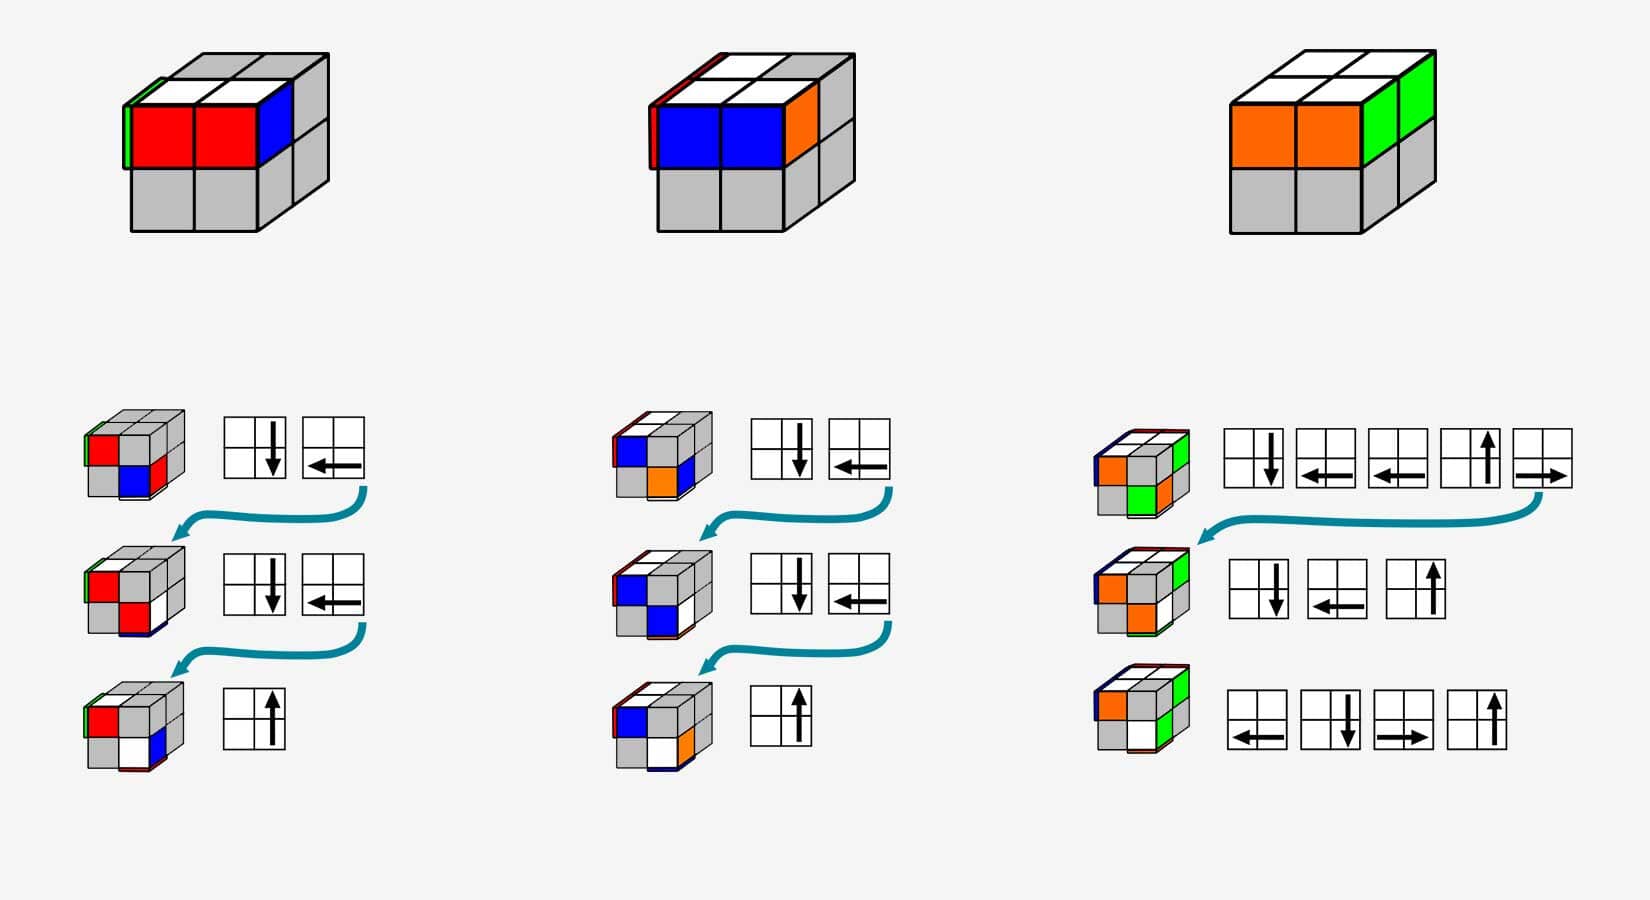 Rubiks cube 2x2